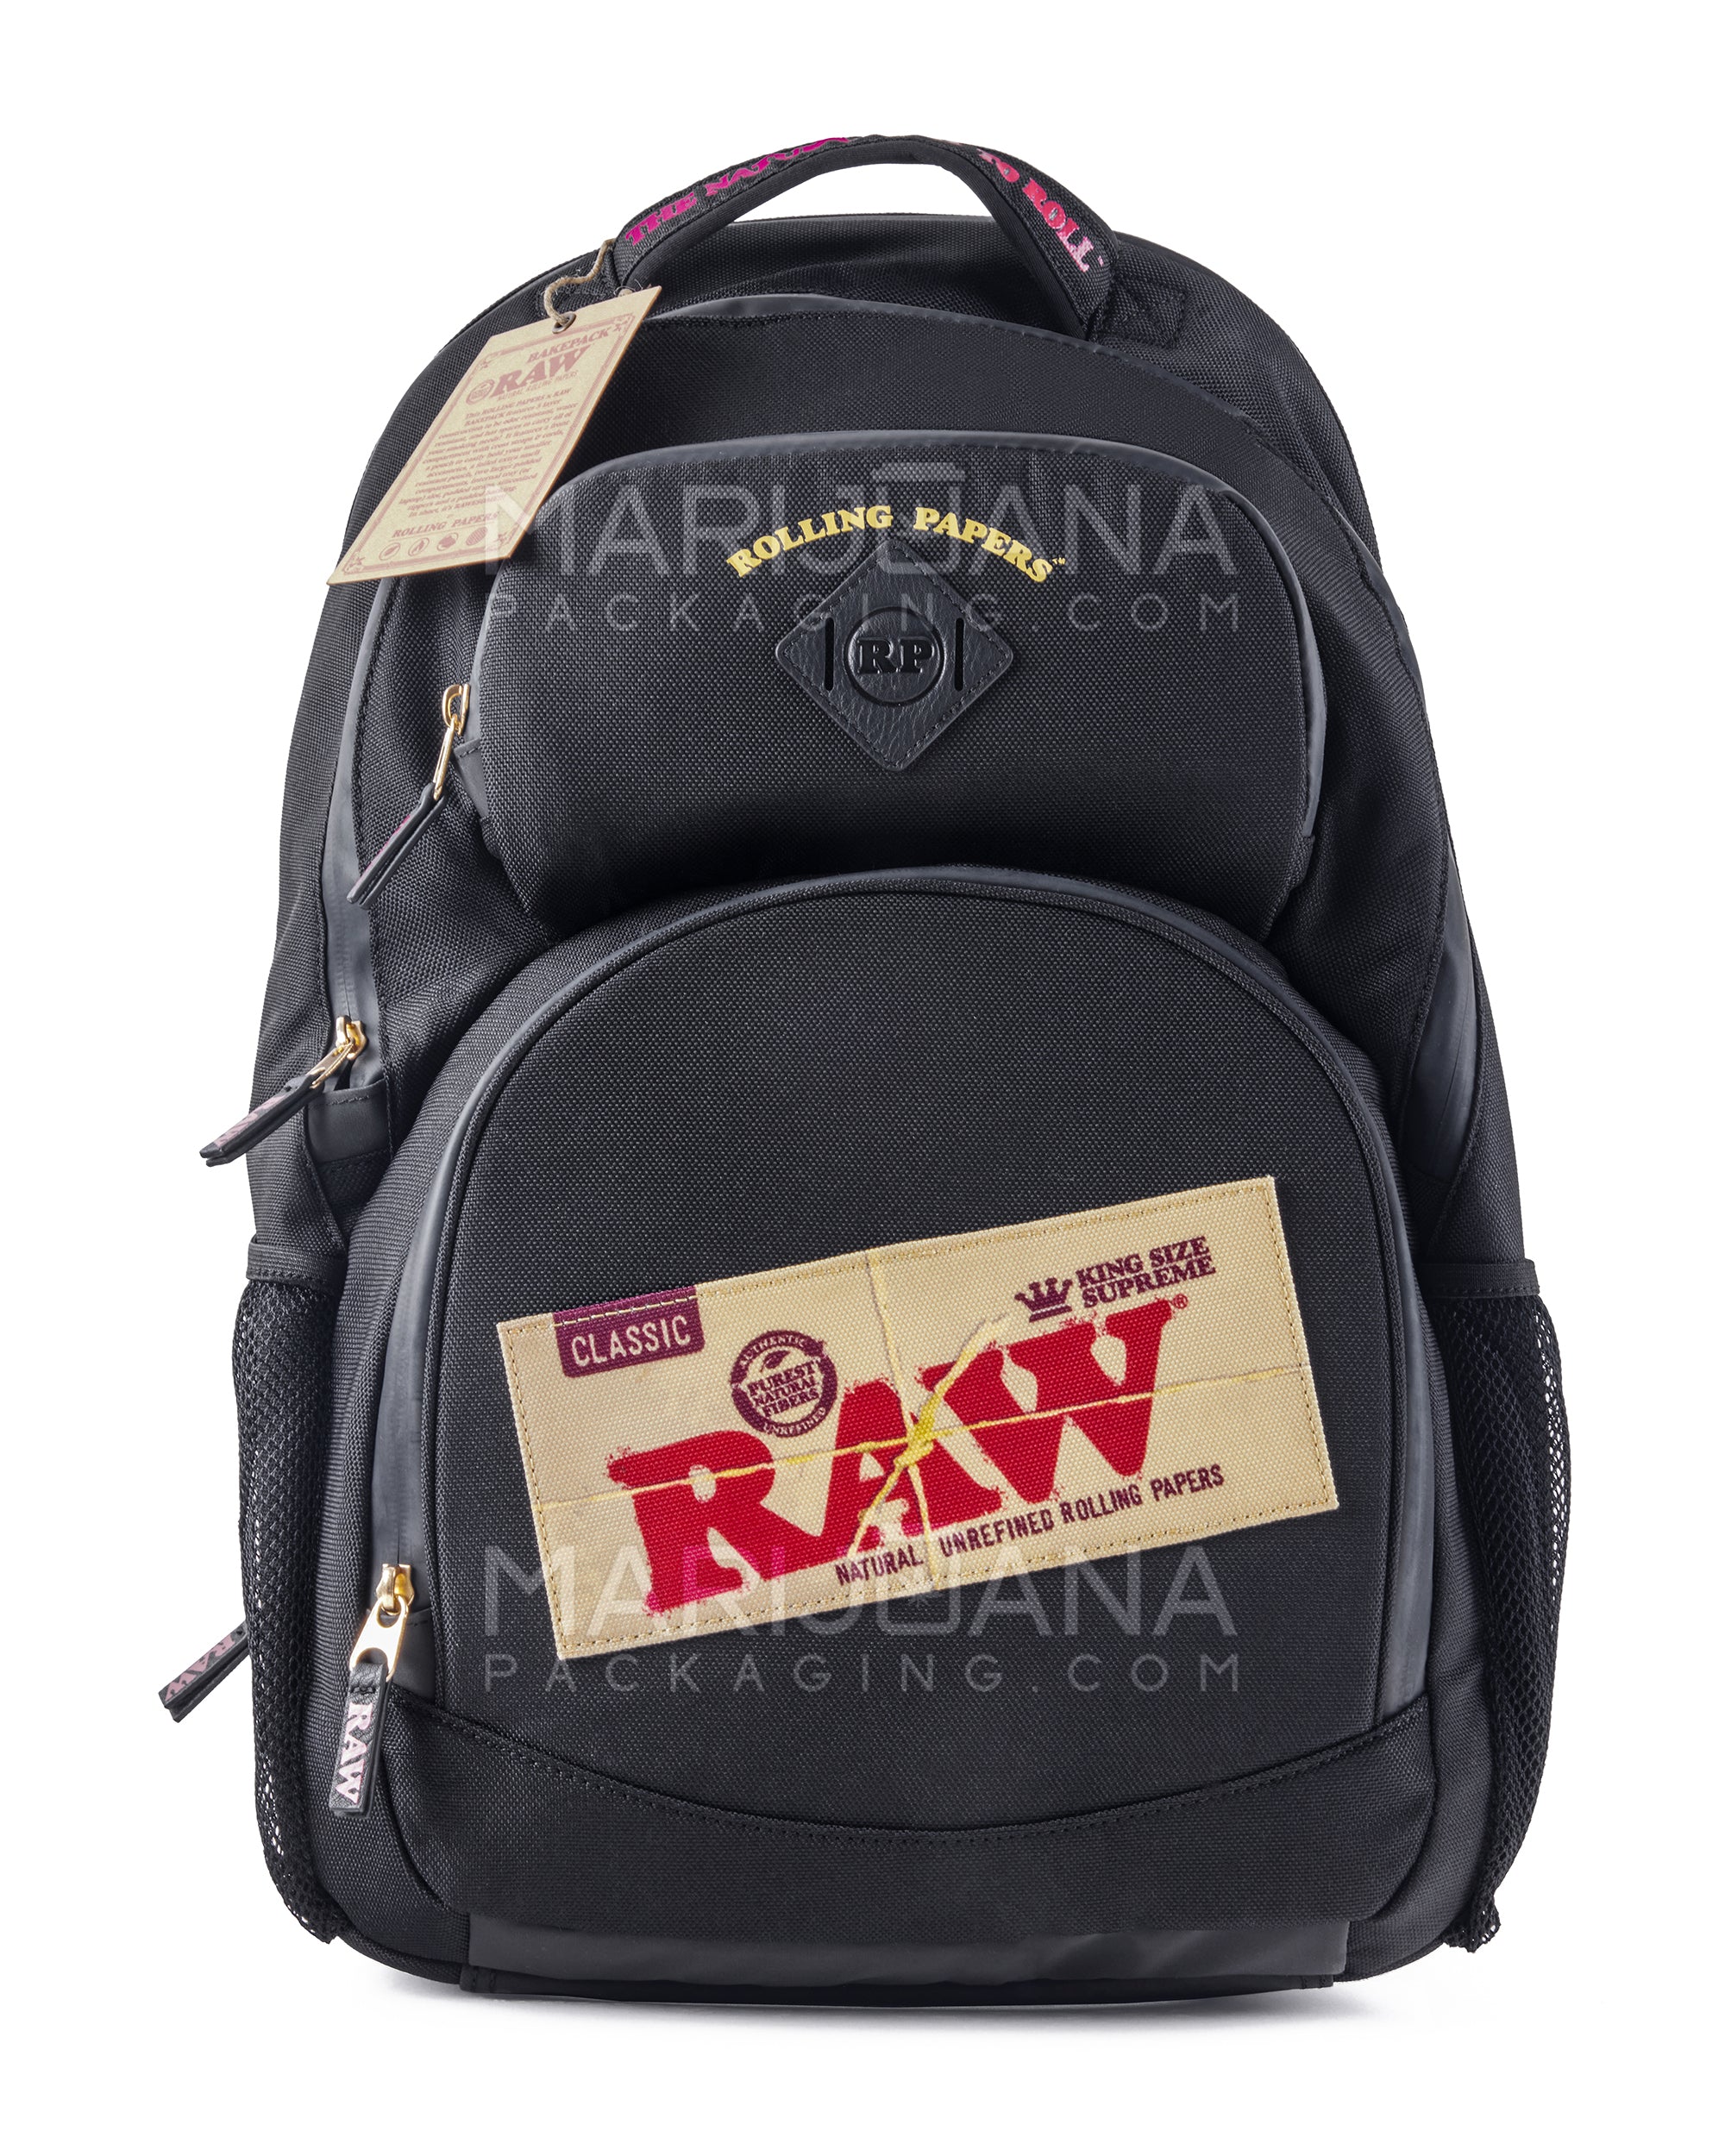 RAW | Rolling Papers Bakepack Odor Blocking Backpack